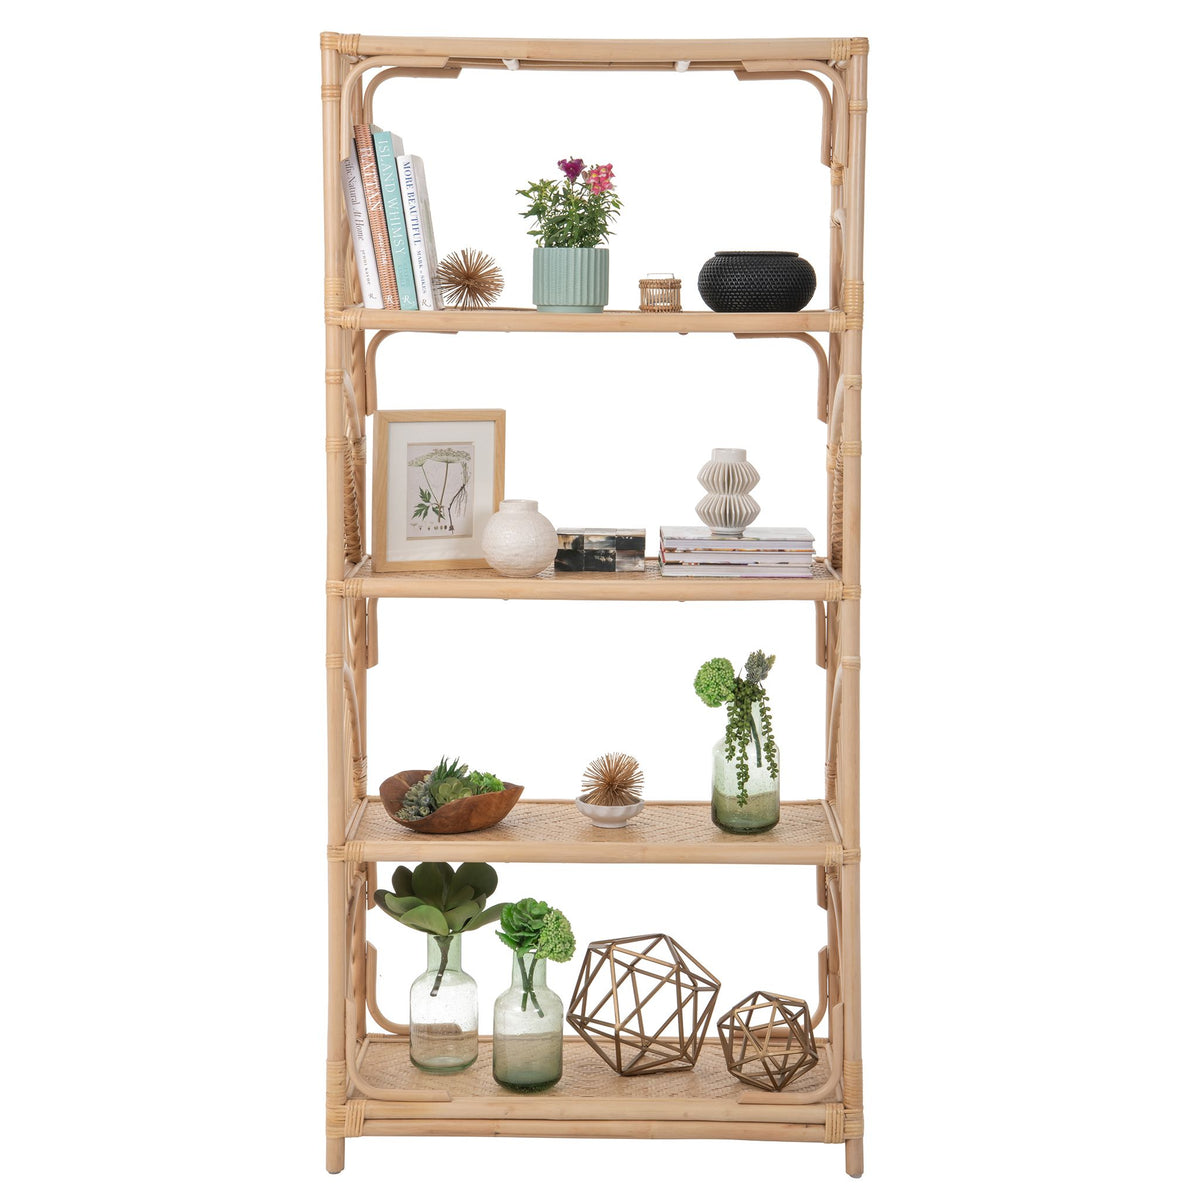 Sunrise Natural Rattan Bookshelf with 4 Shelves - Freestanding Display Shelving Unit -  Storage Bookshelf